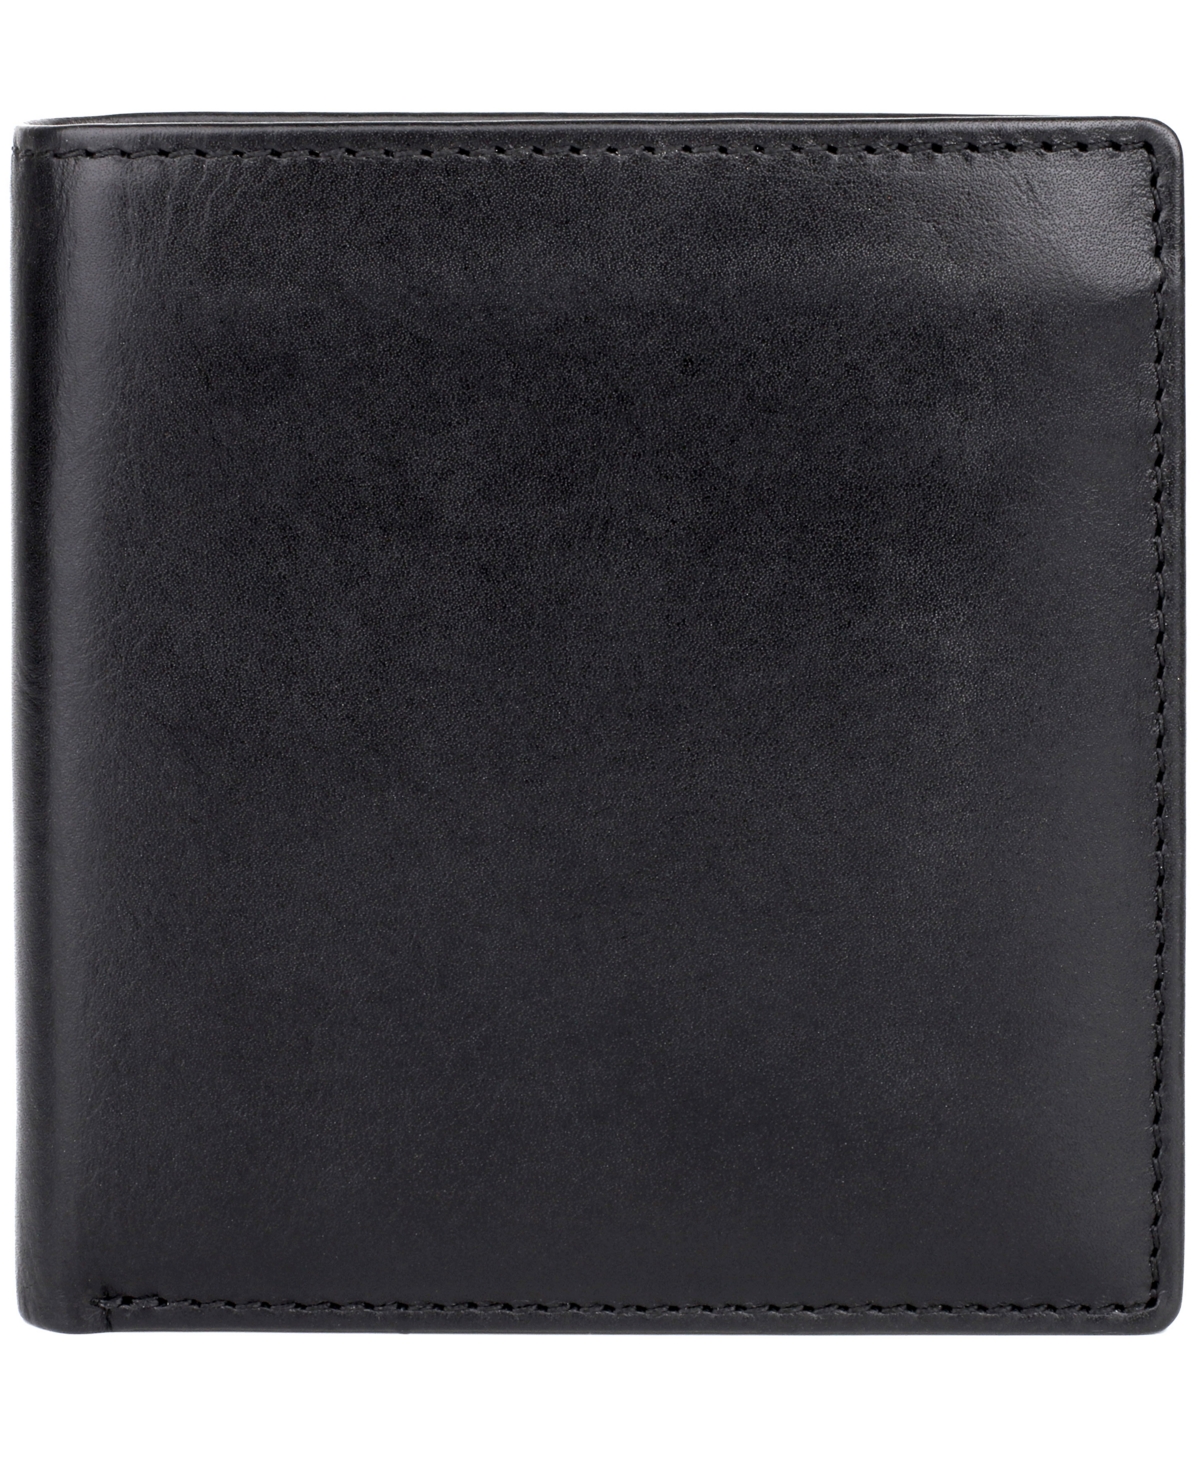 Dopp Regatta Convertible Cardex Wallet In Black